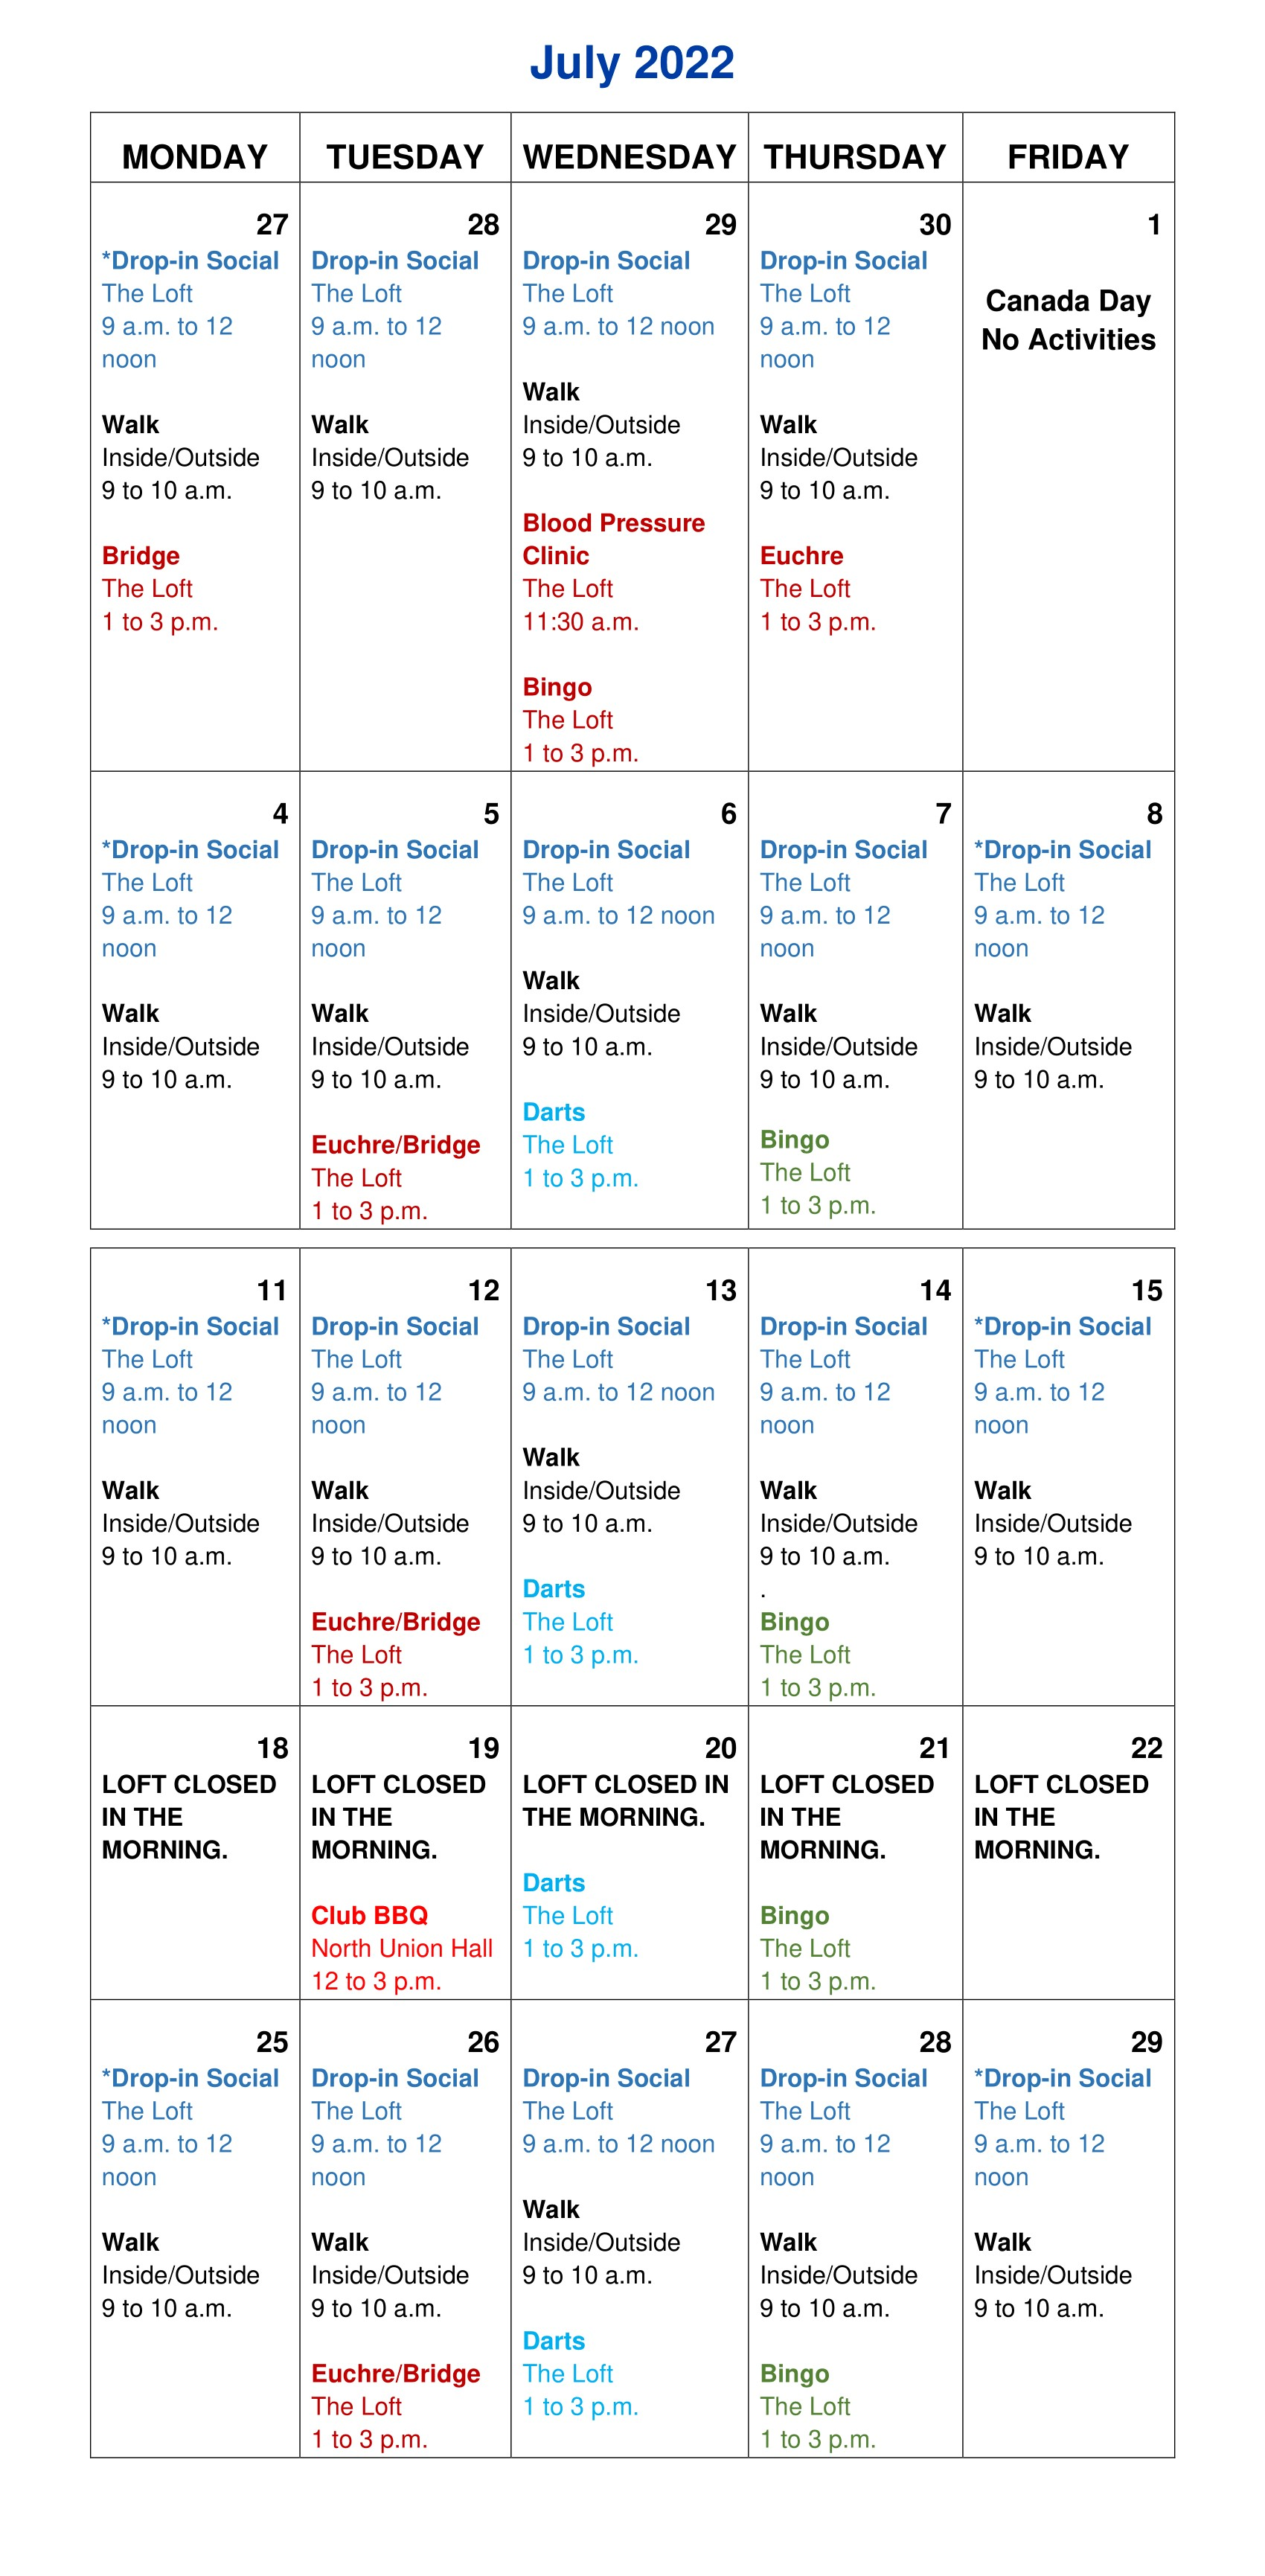 July 2022 activity calendar